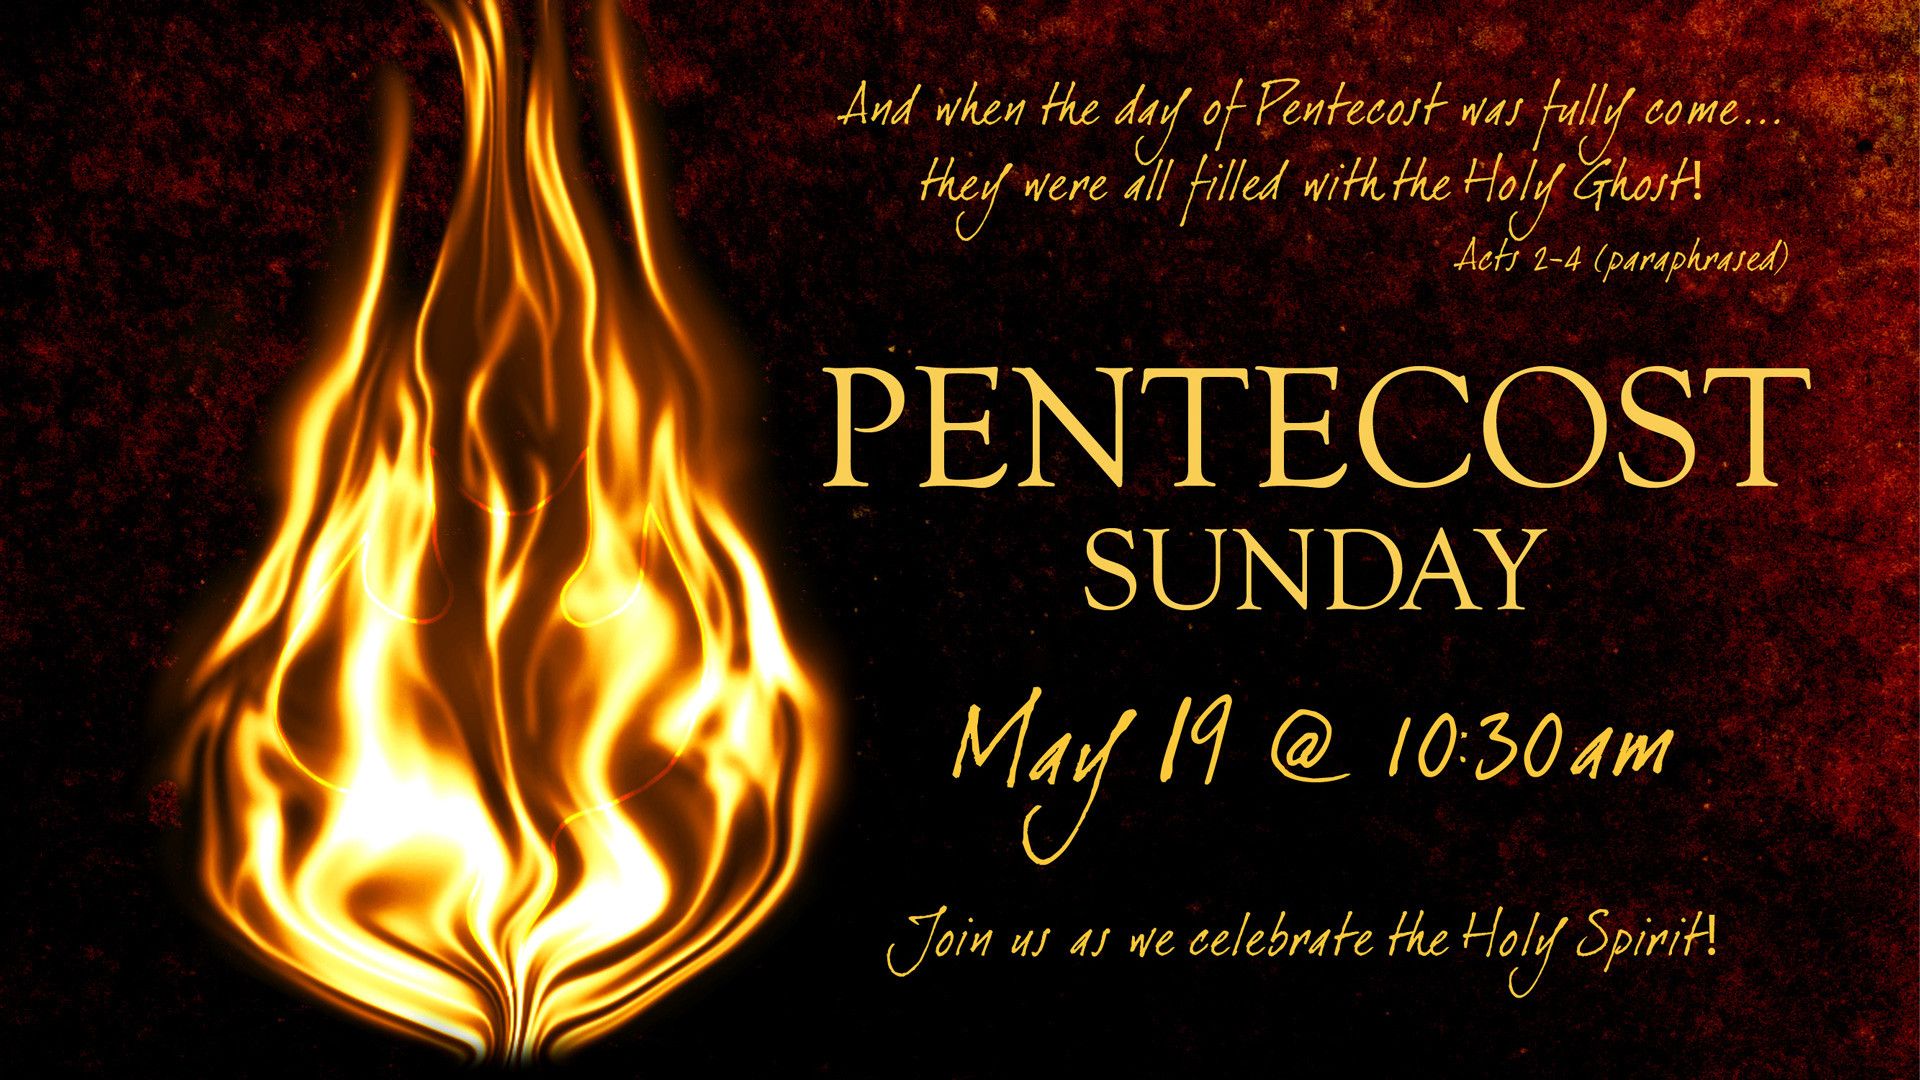 Pentecost Sunday Pictures Wallpaper Pics Image